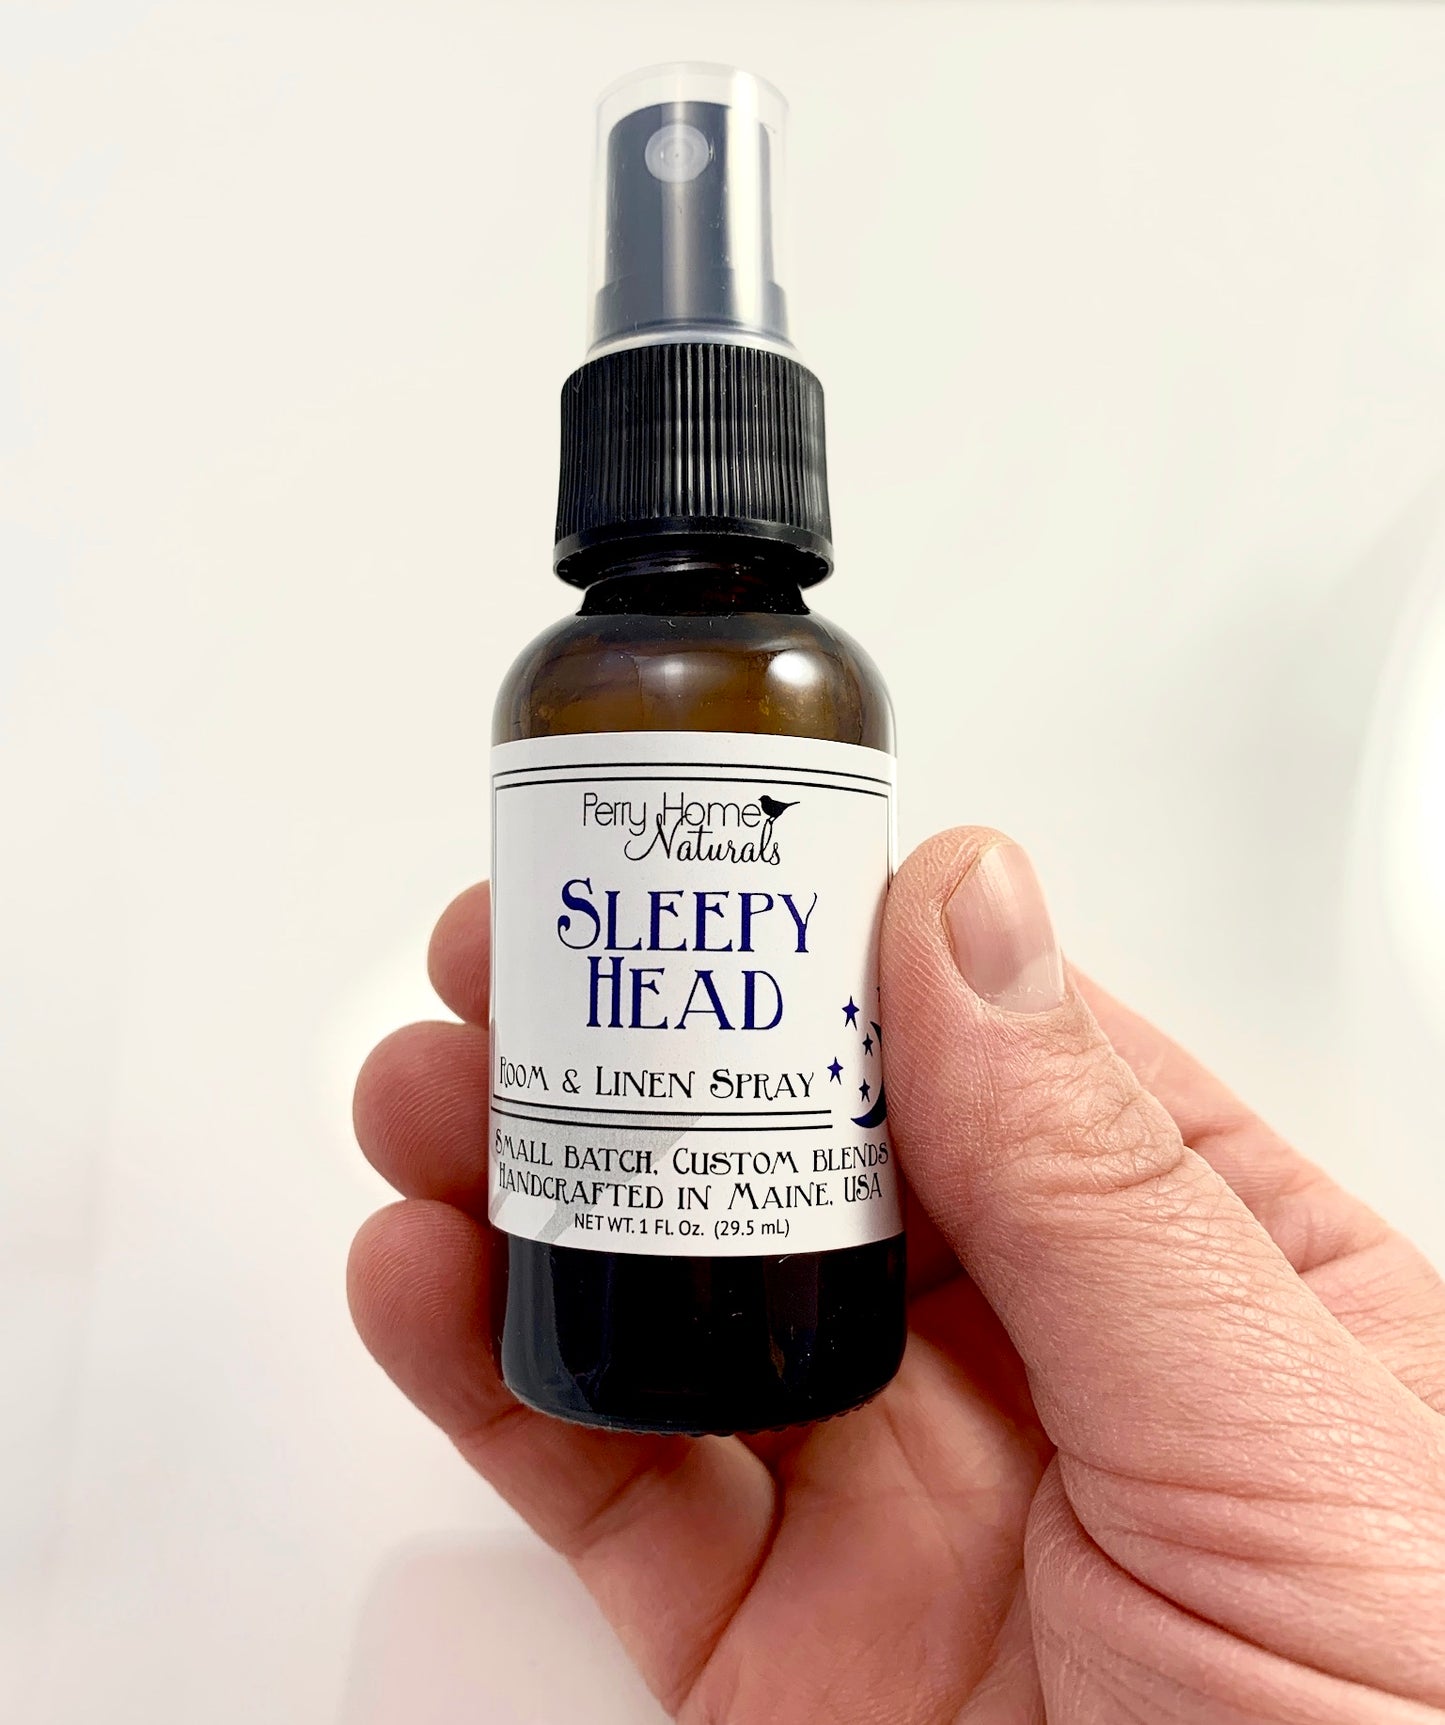 Sleepy Head Organic Room and Linen Spray - Aromatherapy Room Spray